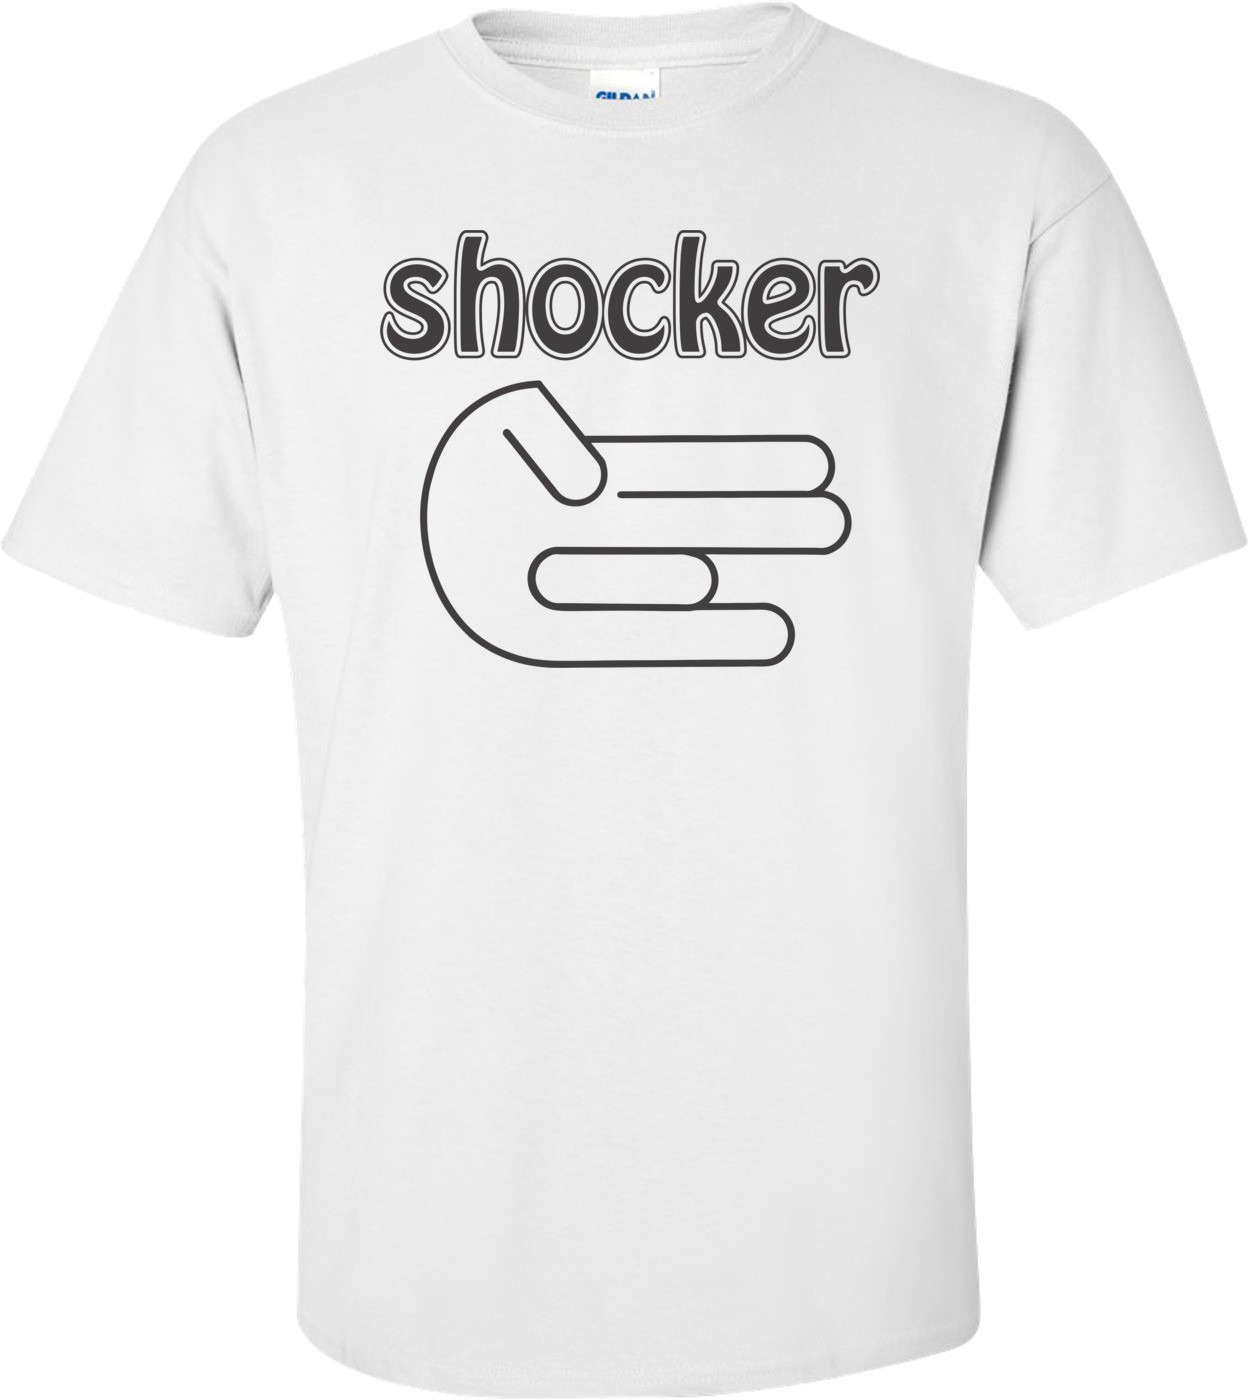 Shocker Funny T-shirt